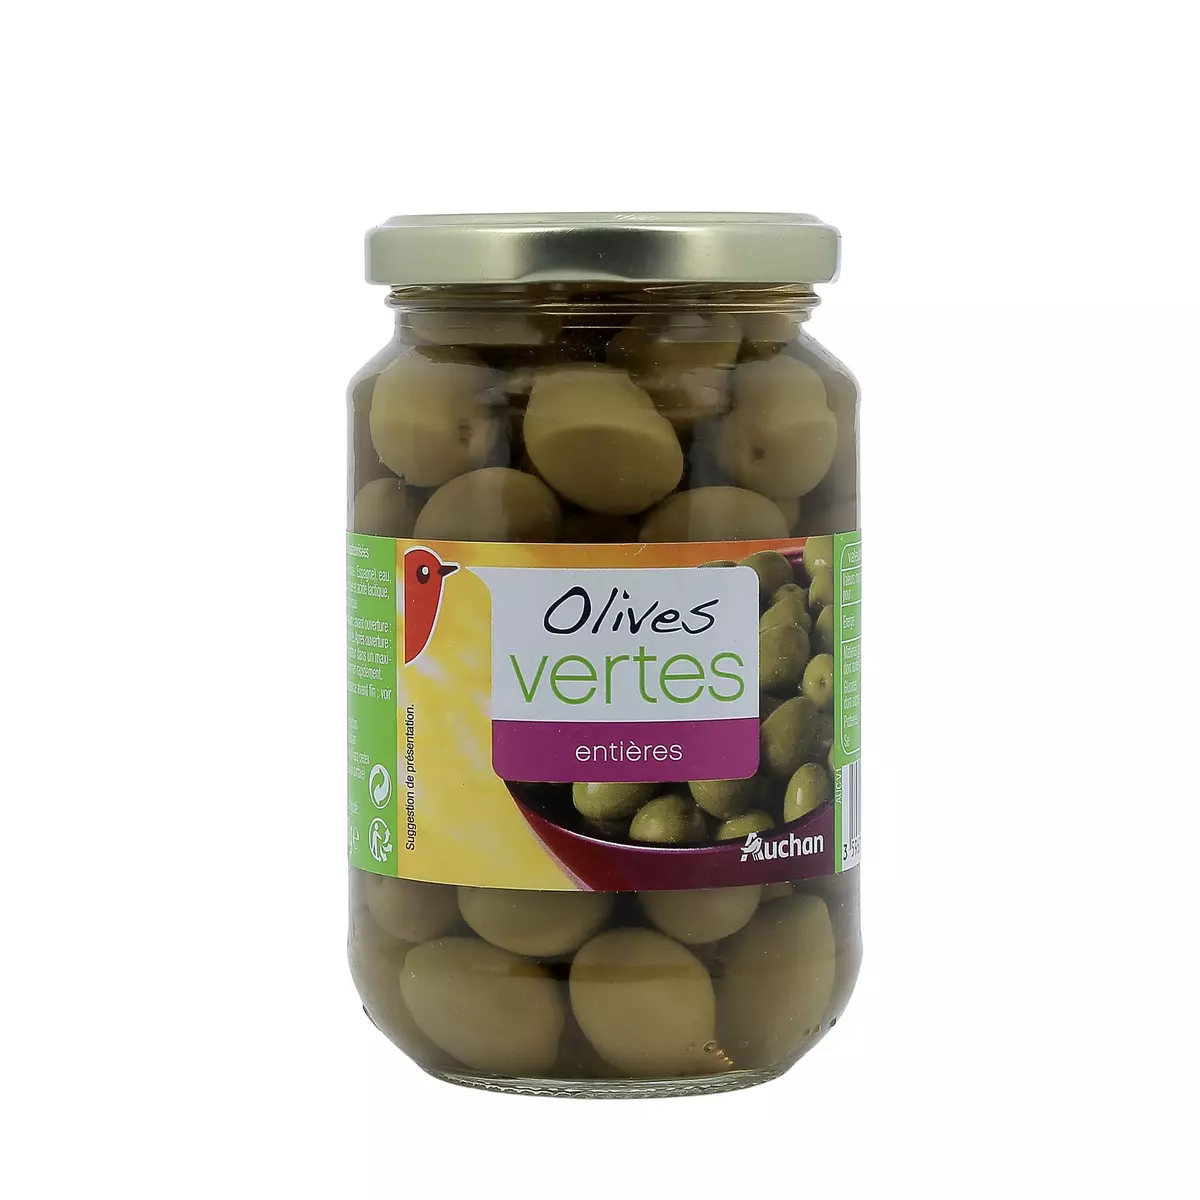 AUCHAN Olives vertes entières 200g